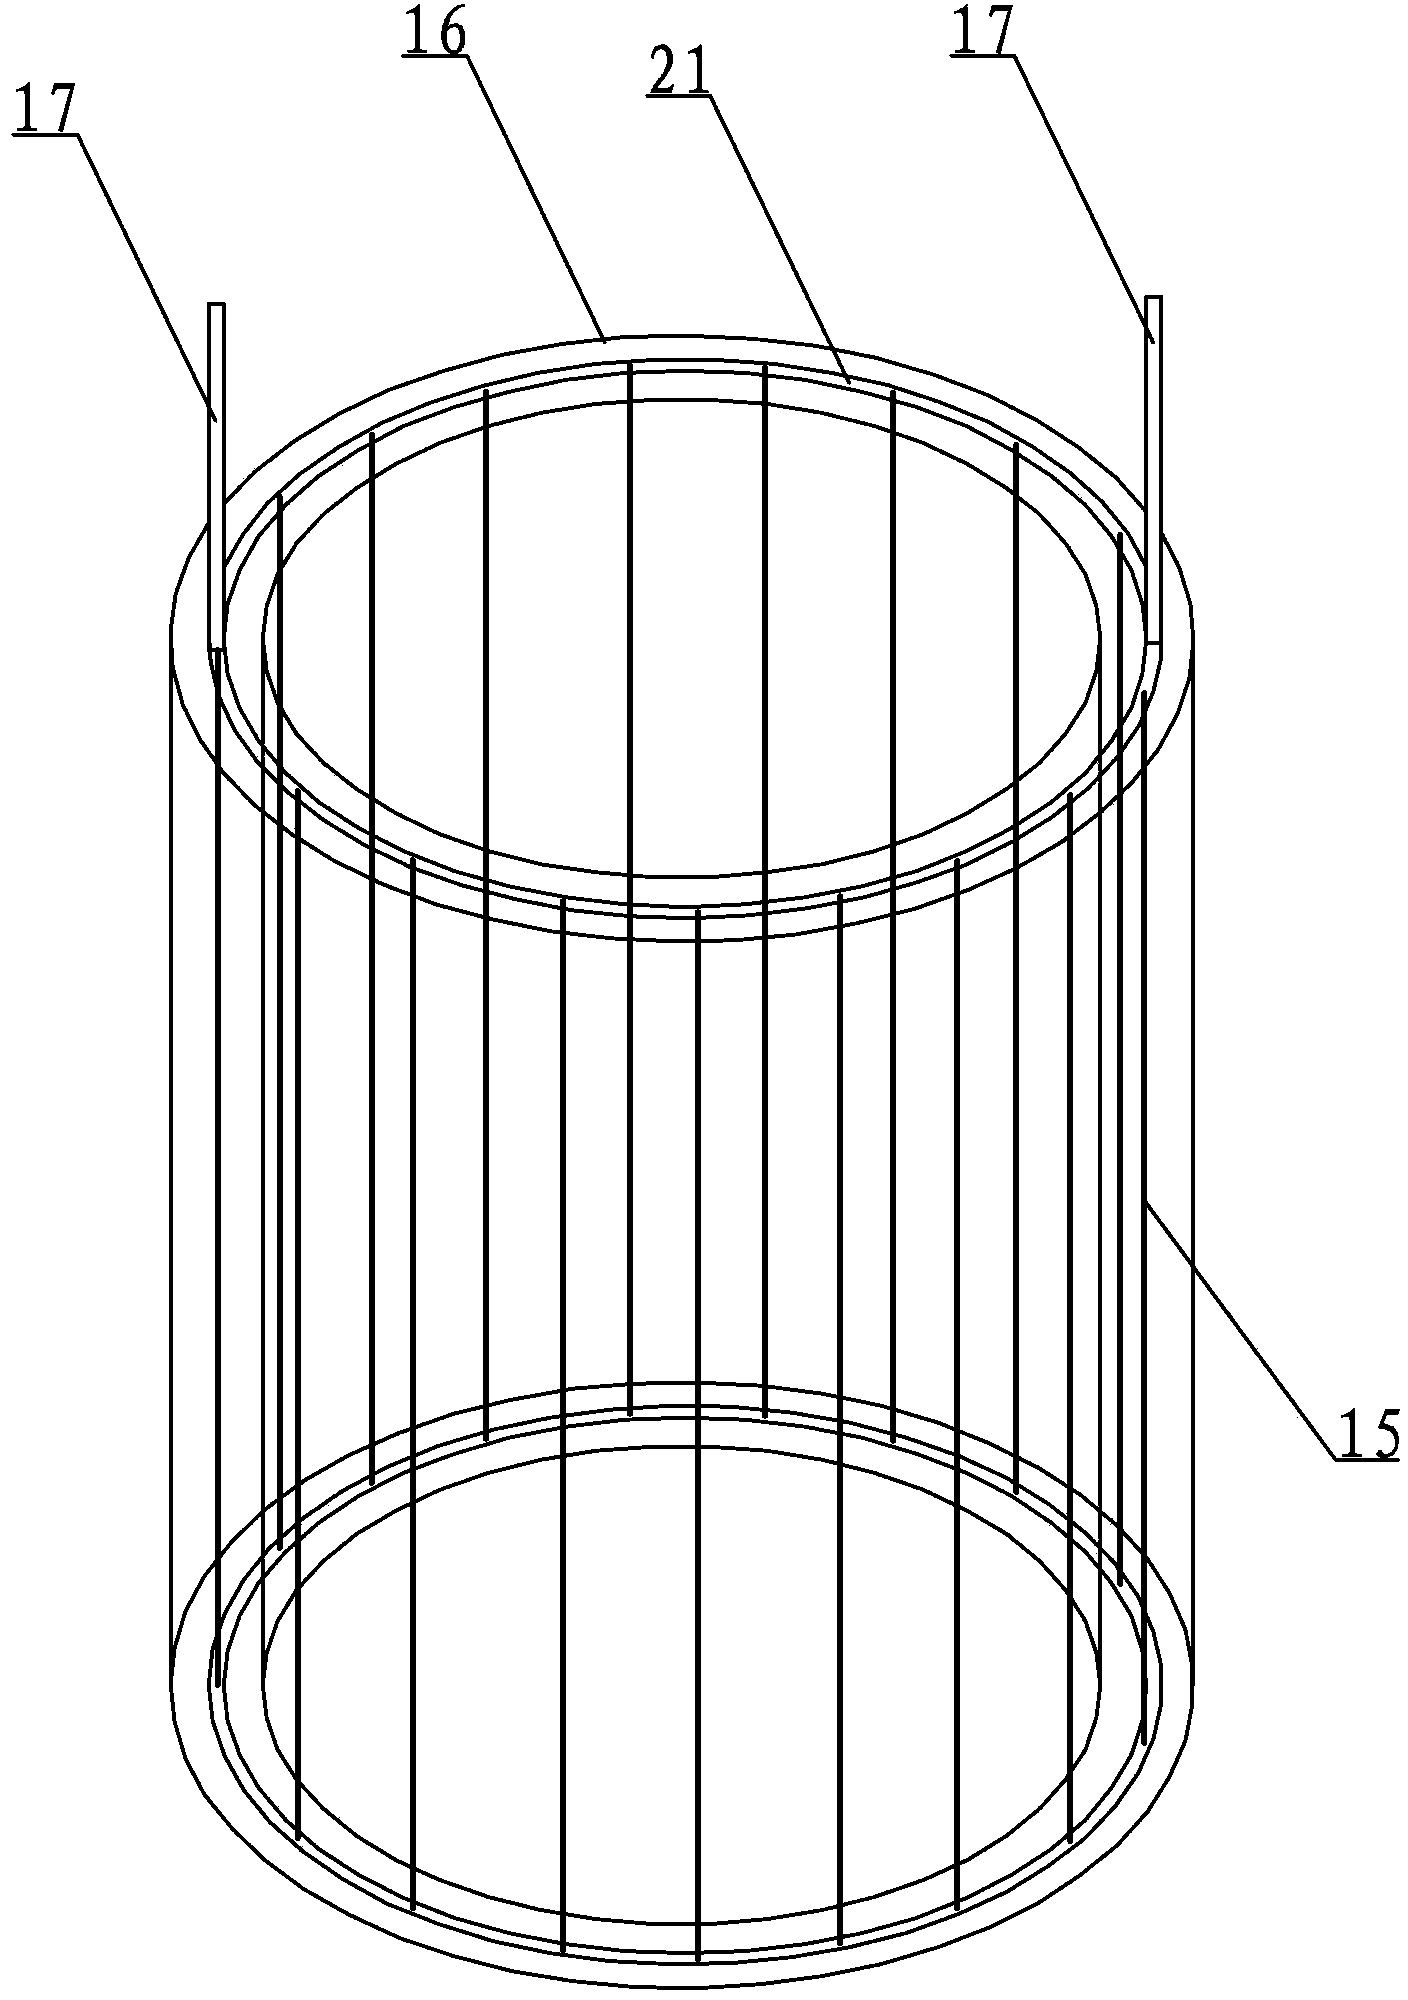 An anaerobic membrane bioreactor for domestic sewage treatment